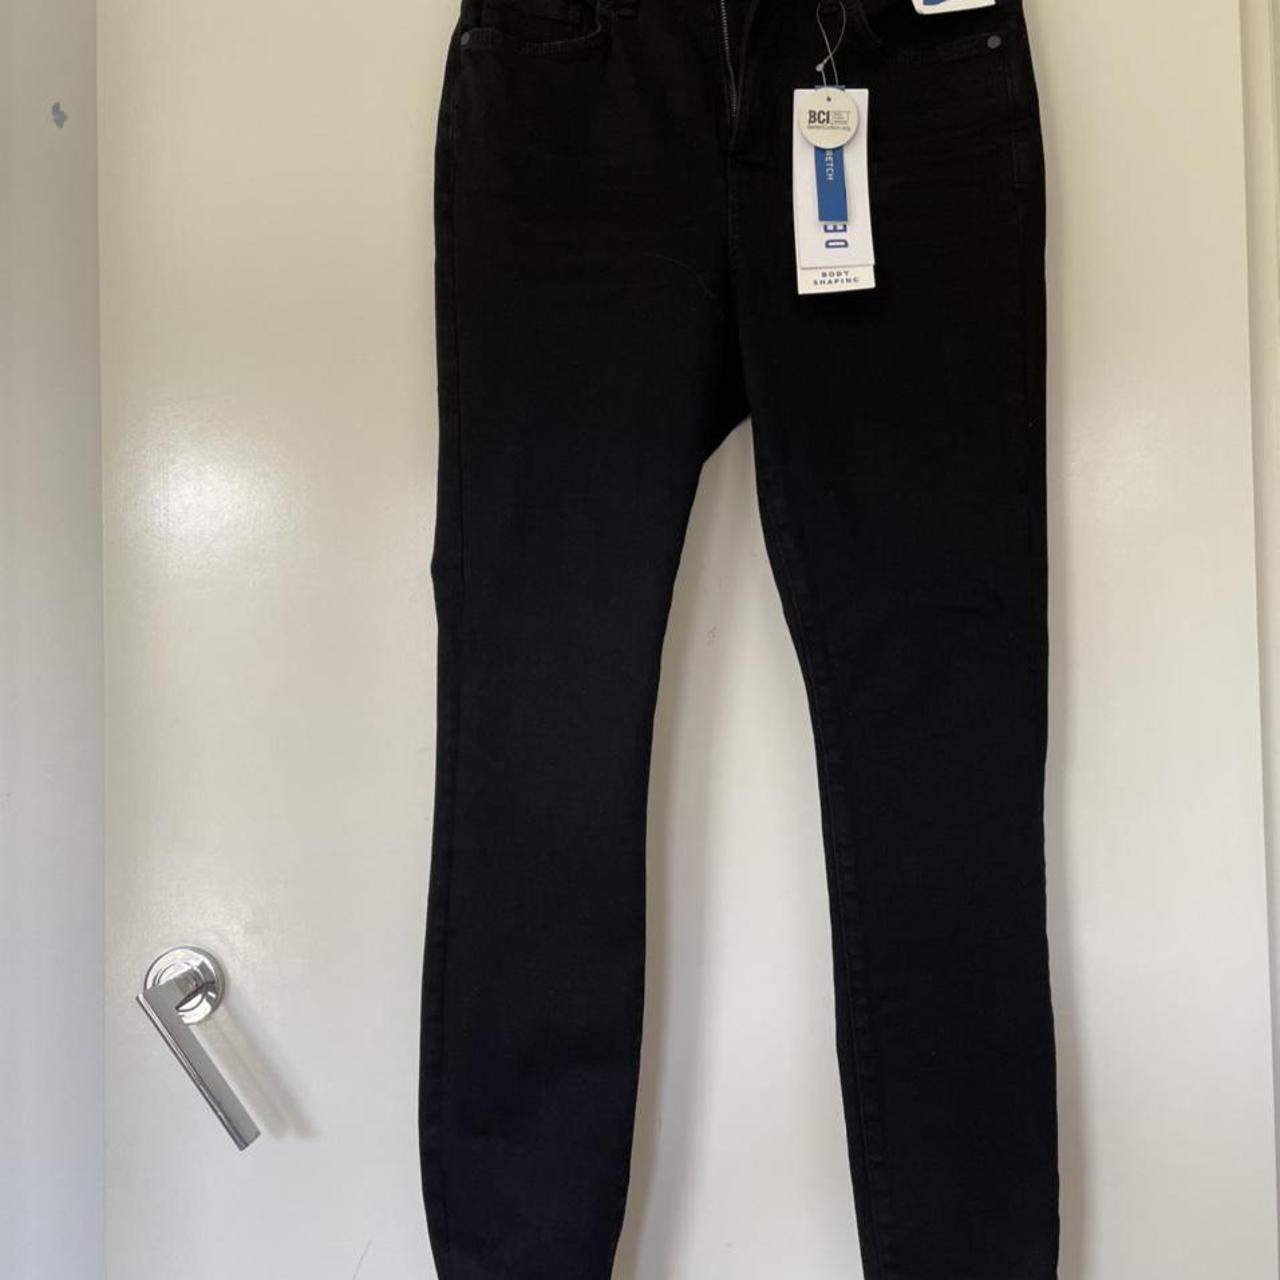 Target ‘Sophie Skinny’ jeans, size 12 (TTS). They... - Depop